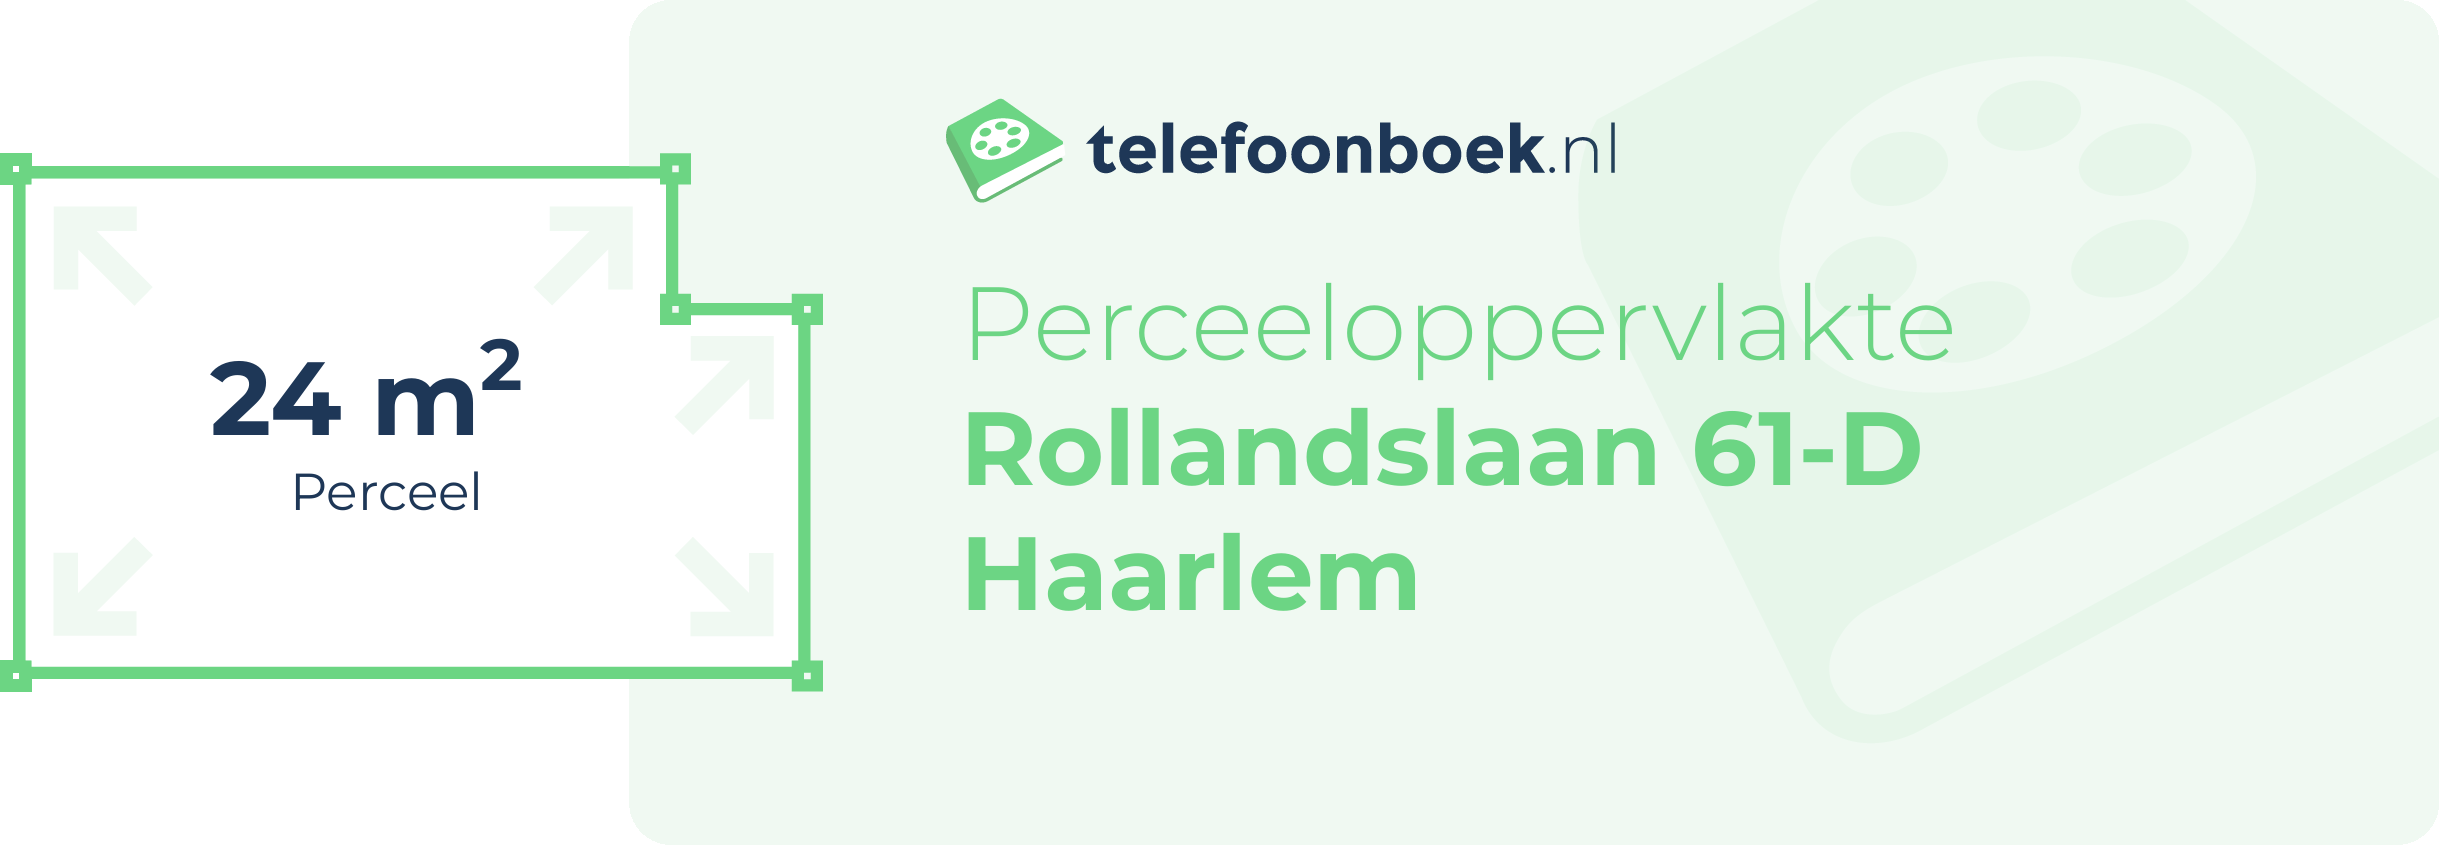 Perceeloppervlakte Rollandslaan 61-D Haarlem